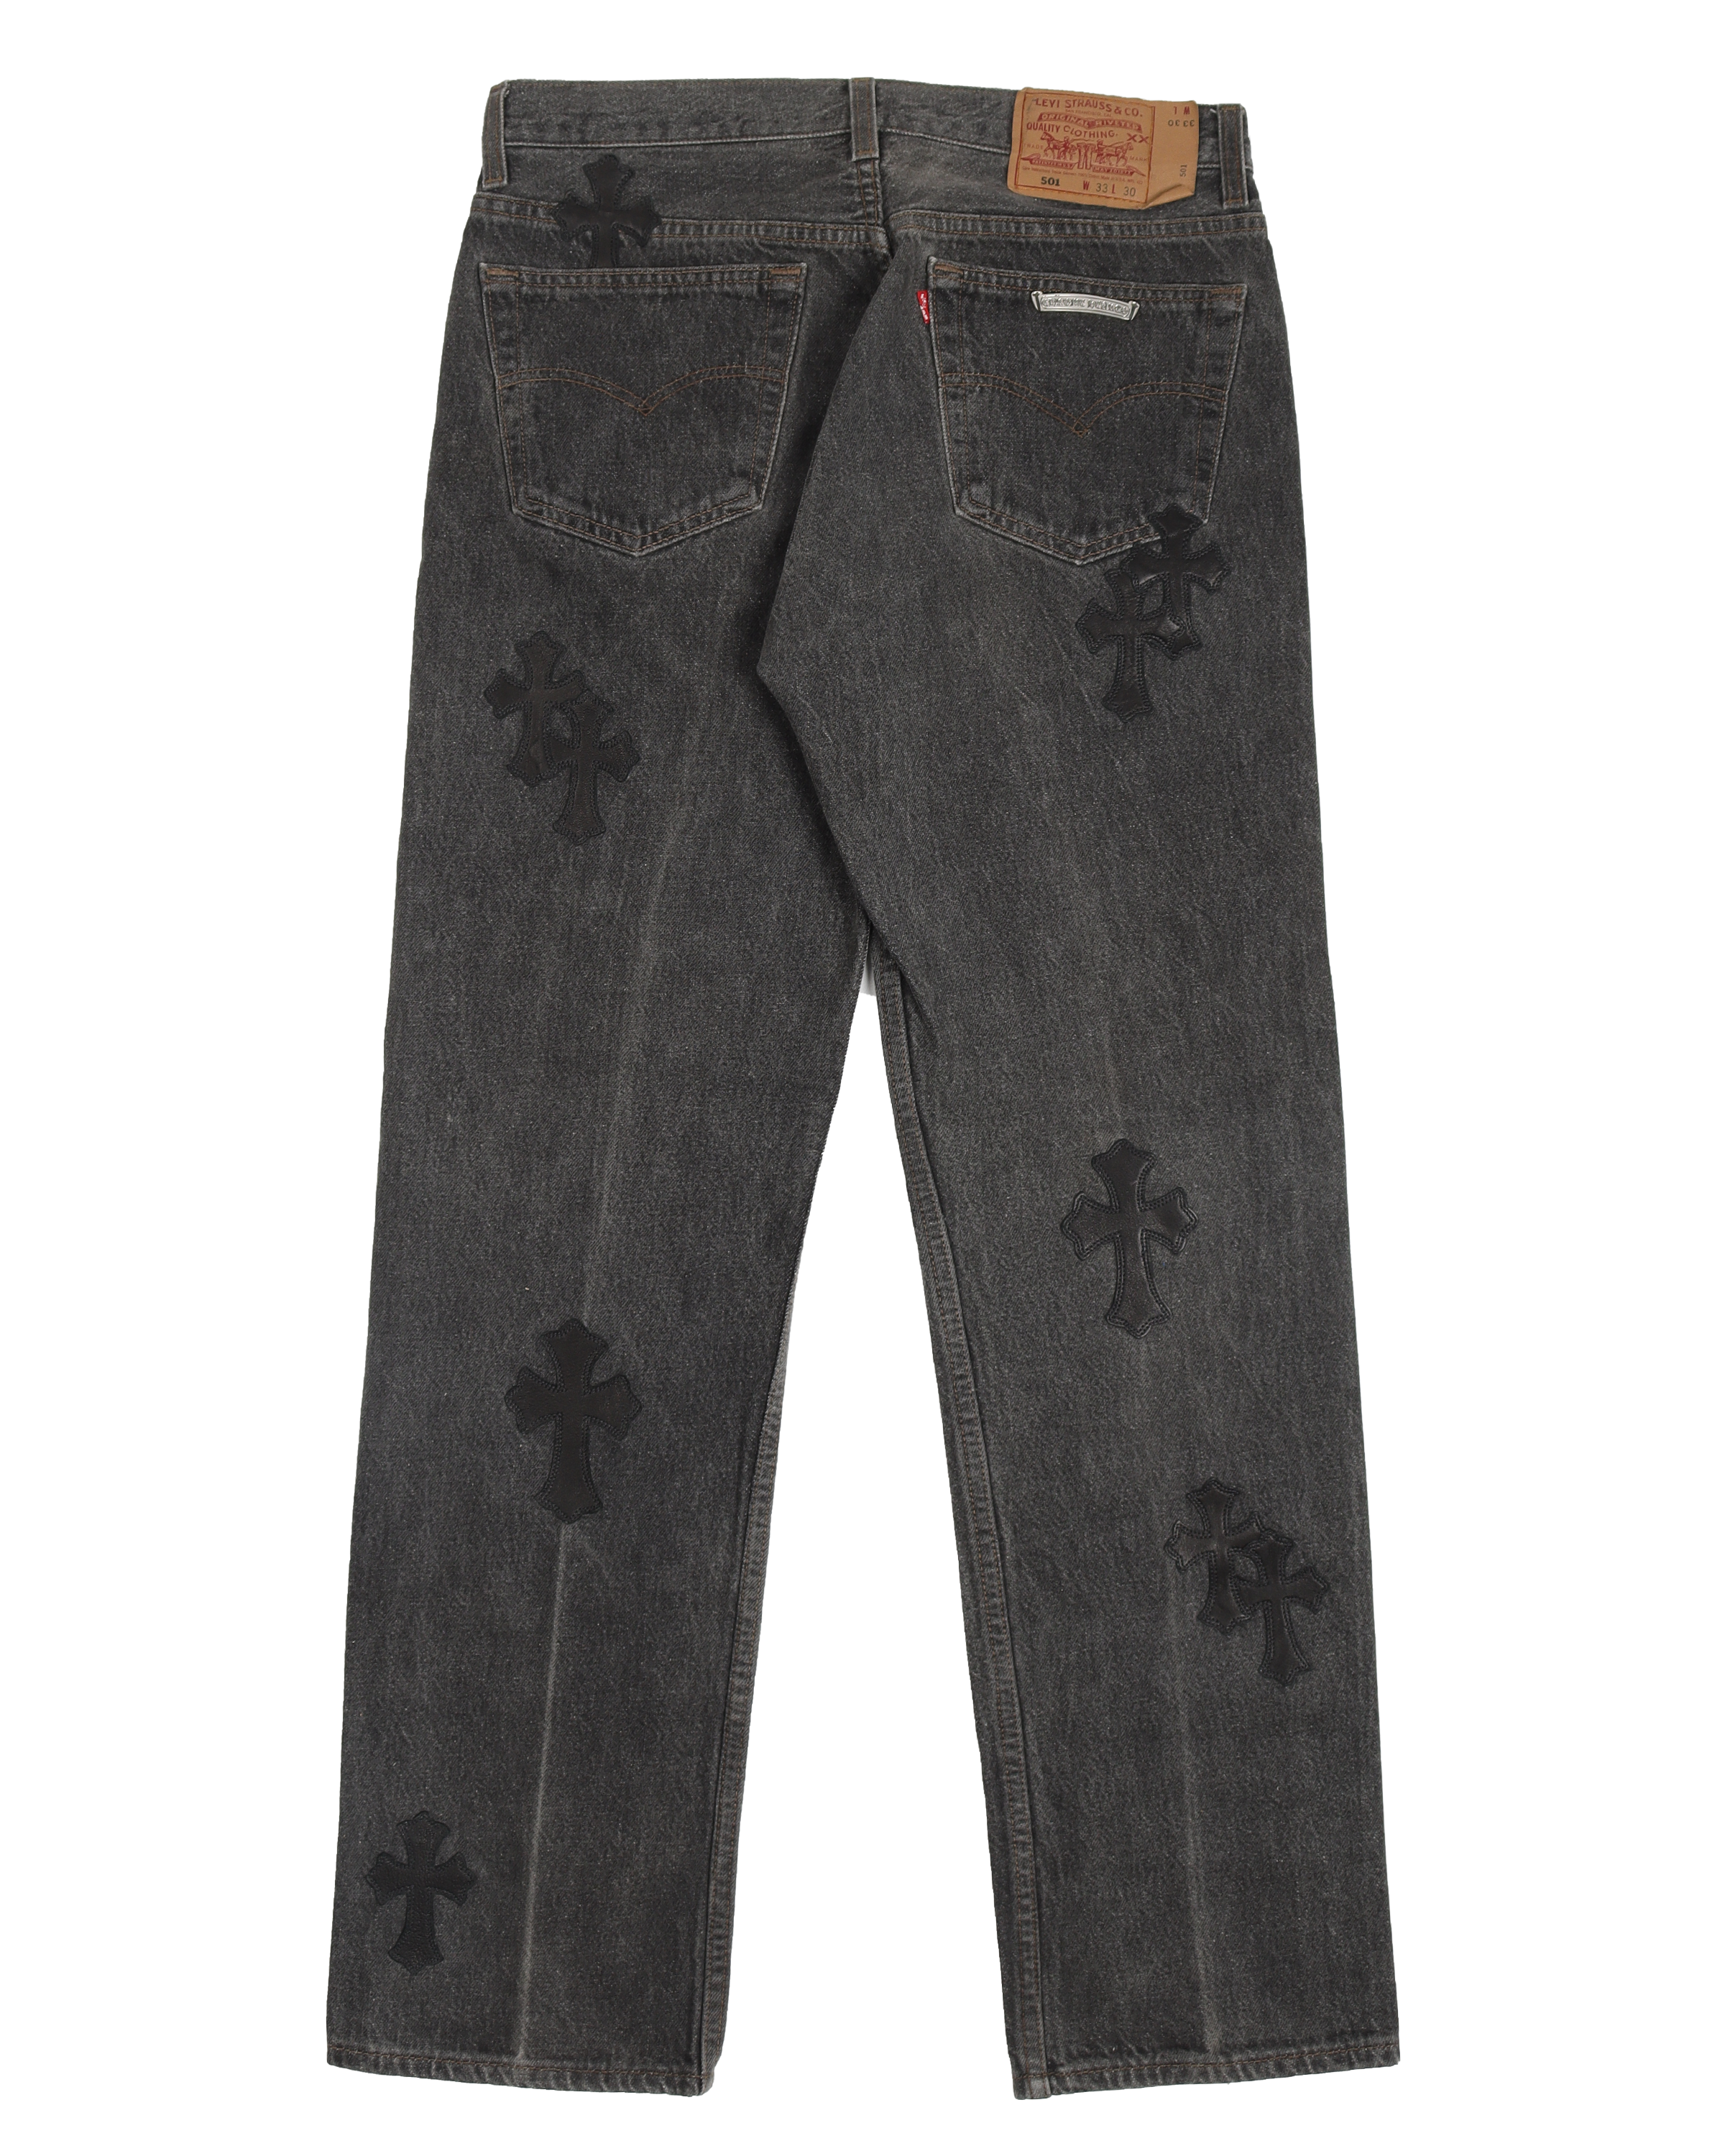 Chrome Hearts Jeans Levi's Size 31 Grey Black Cross Denim